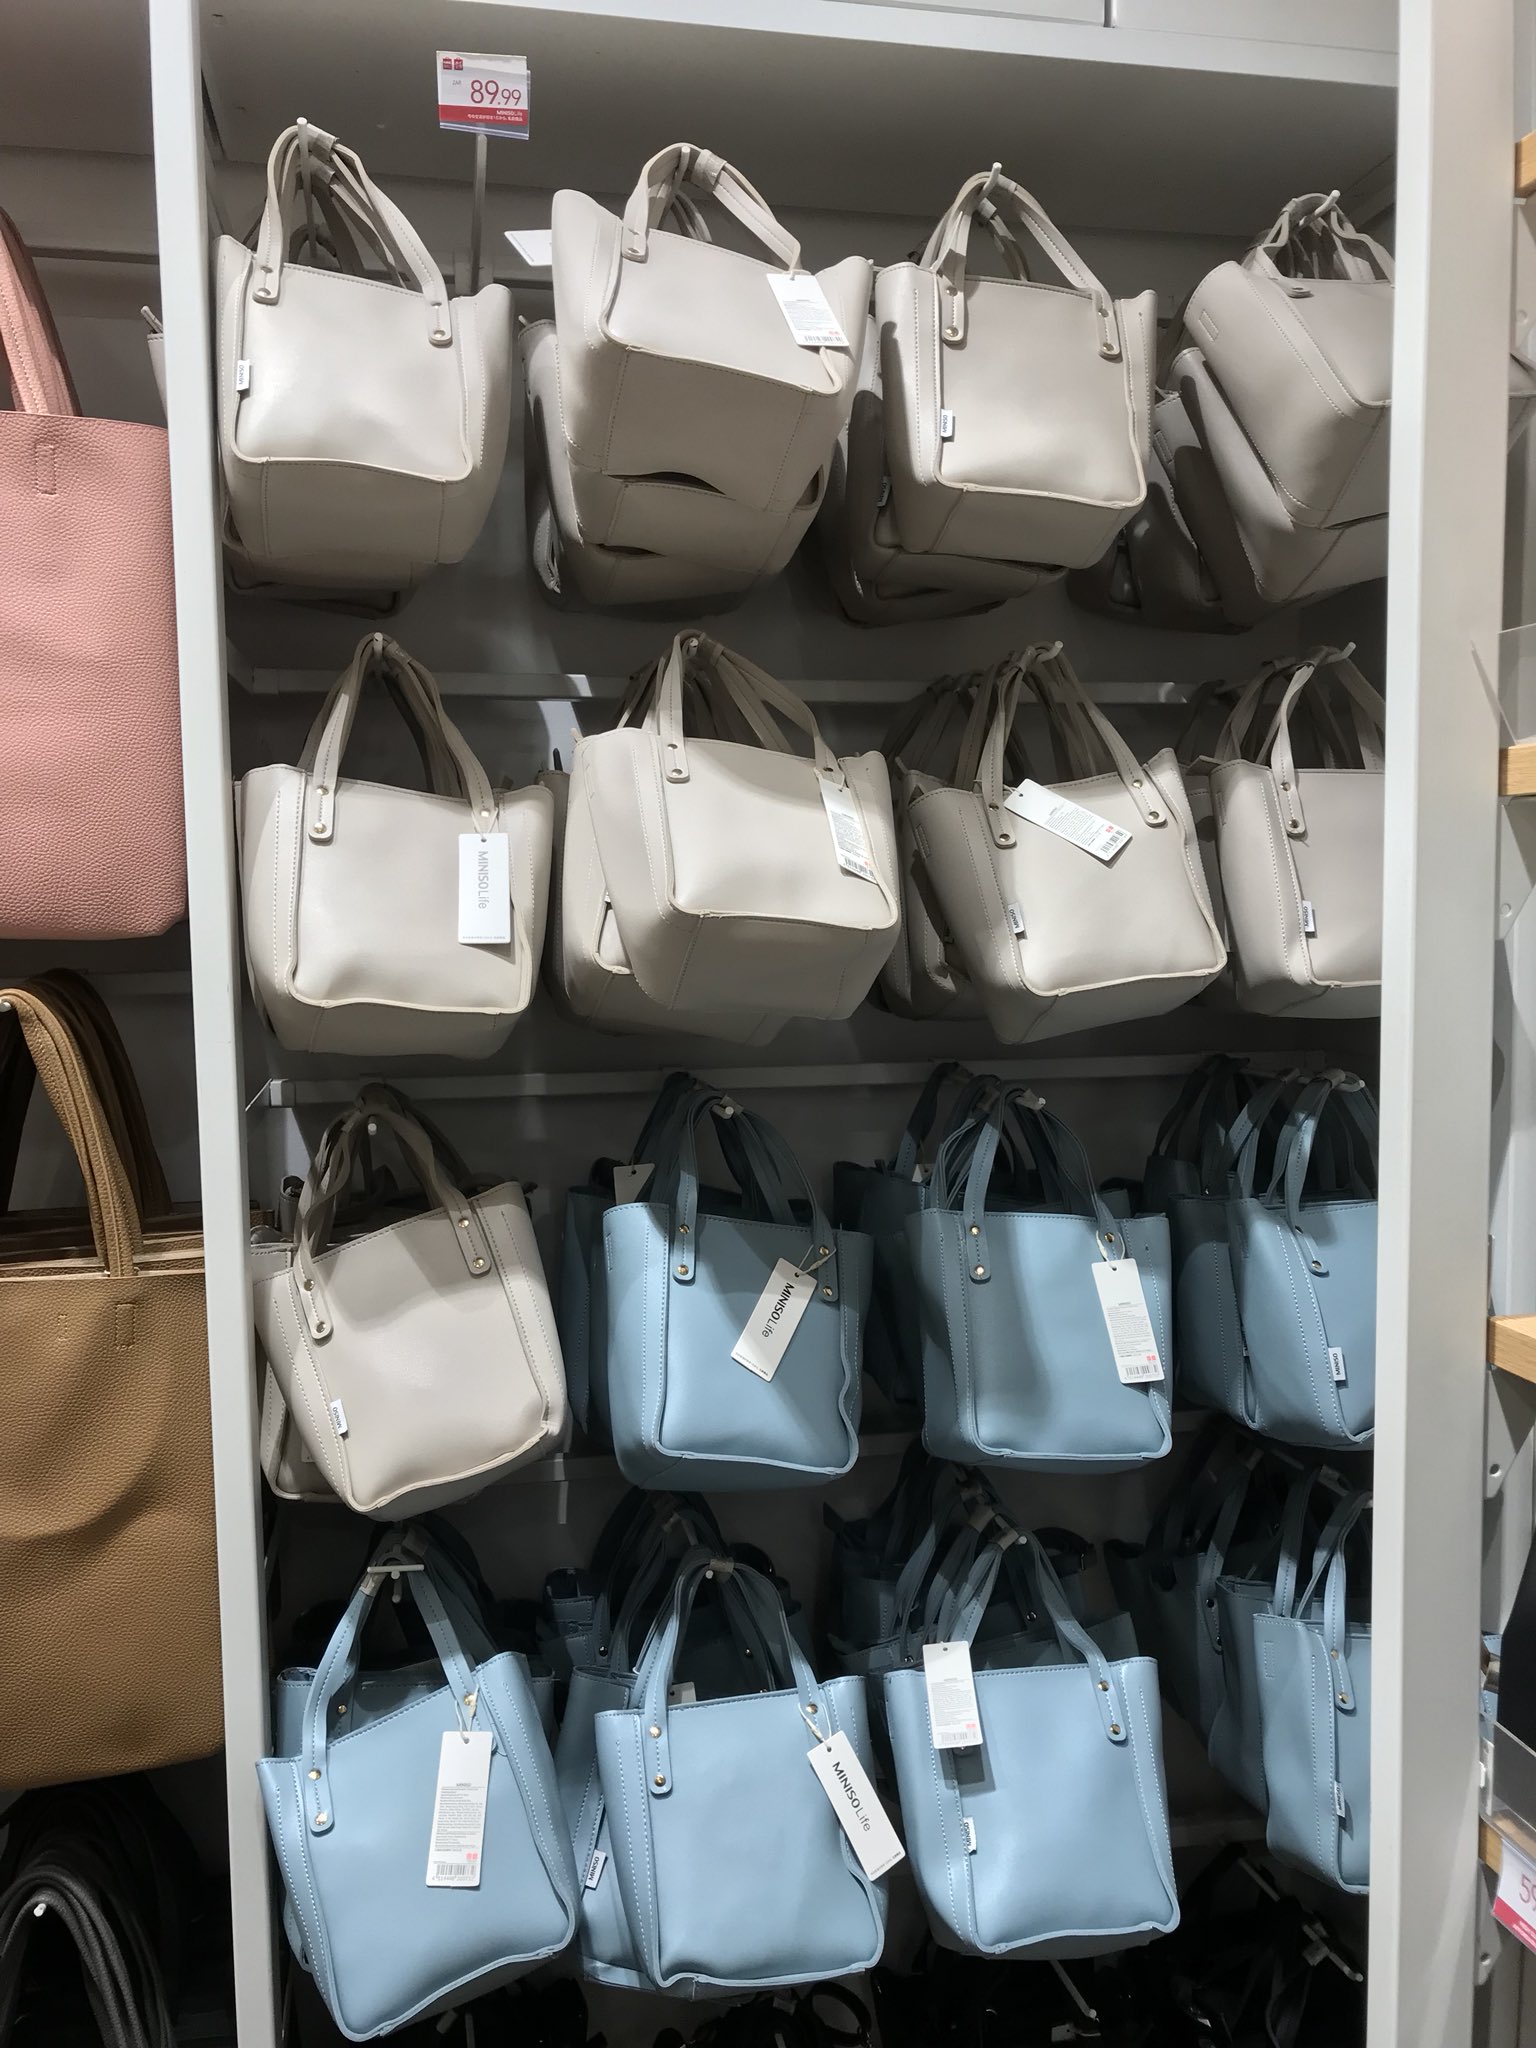 miniso bag collection